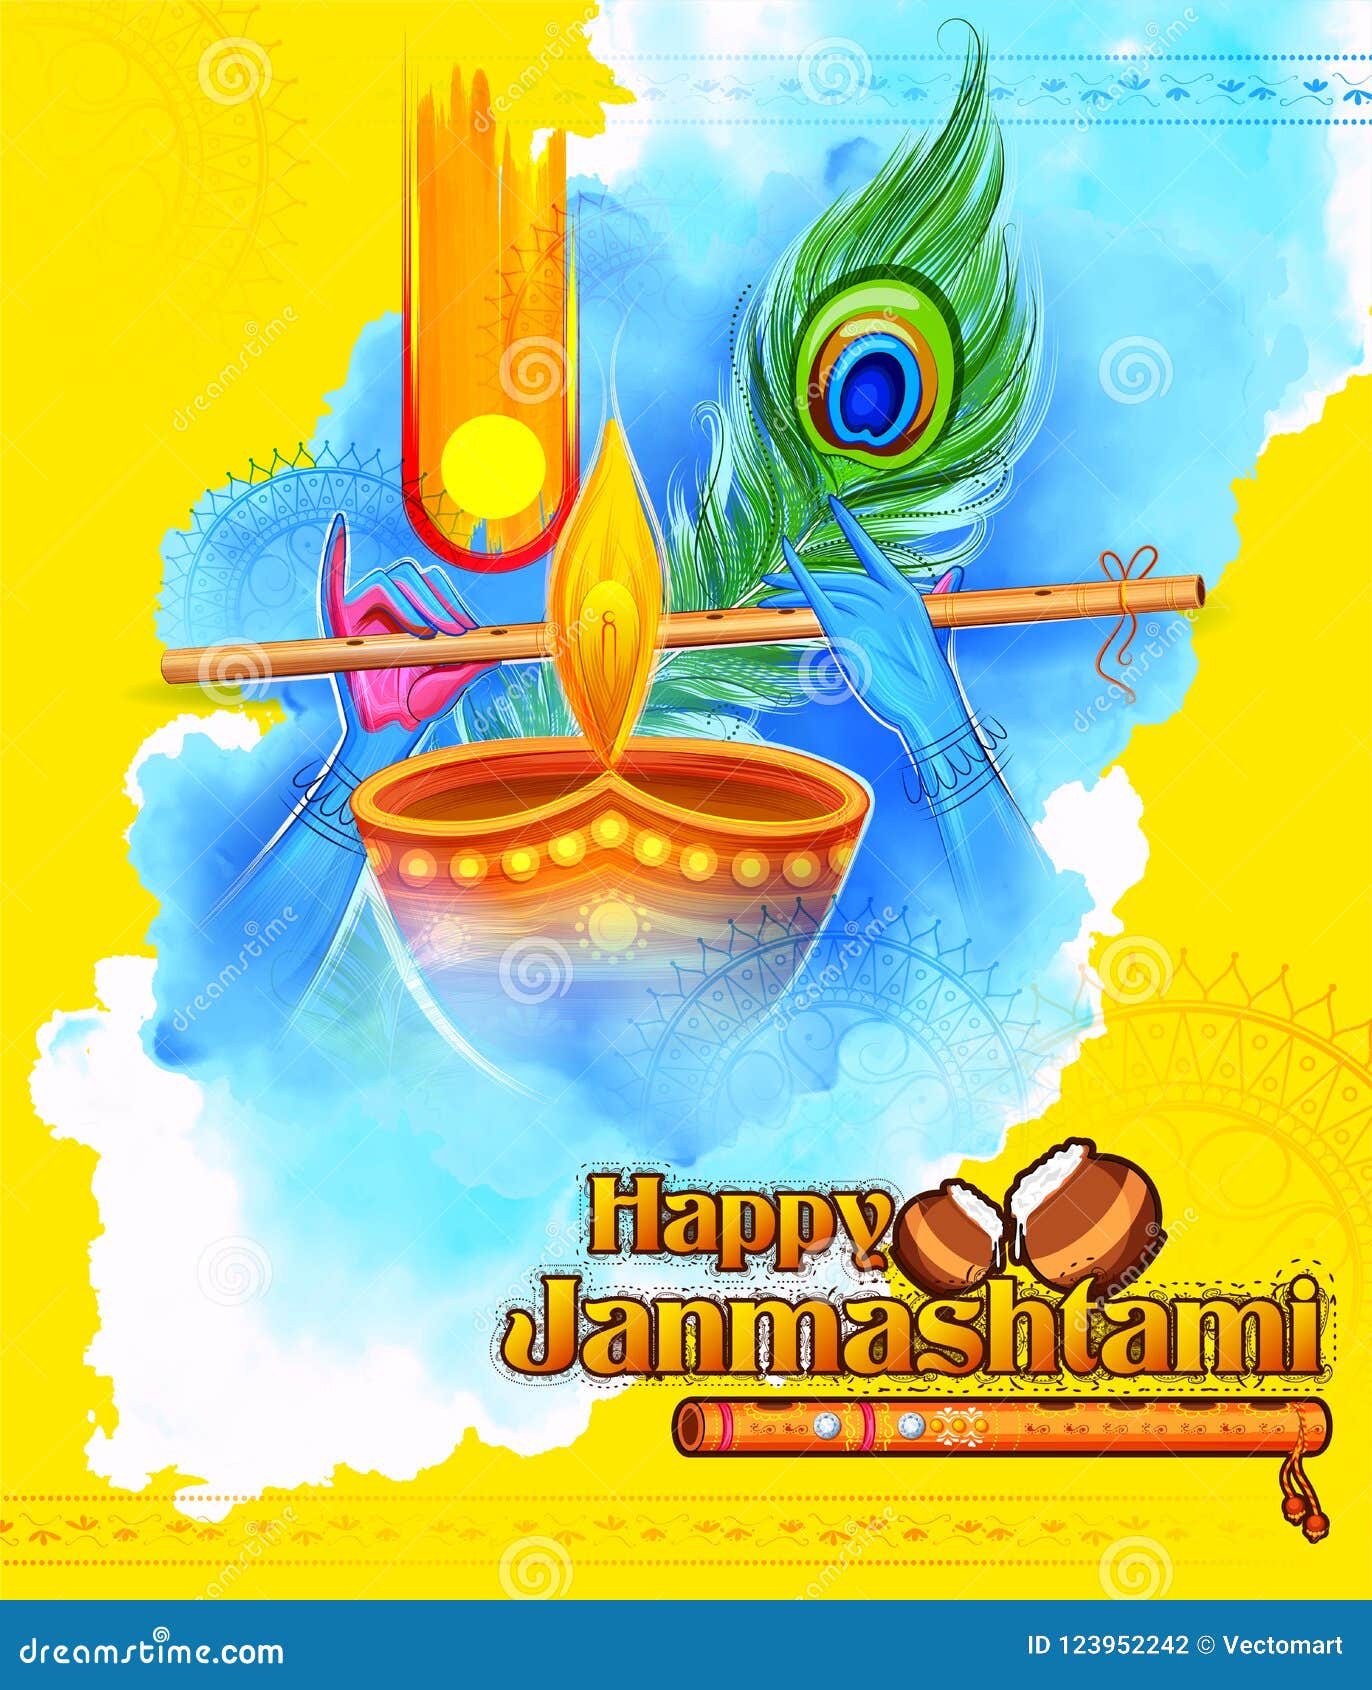 Lord Krishna Playing Bansuri Flute in Happy Janmashtami Festival Background  of India Stock Vector - Illustration of deity, bhakti: 123952242